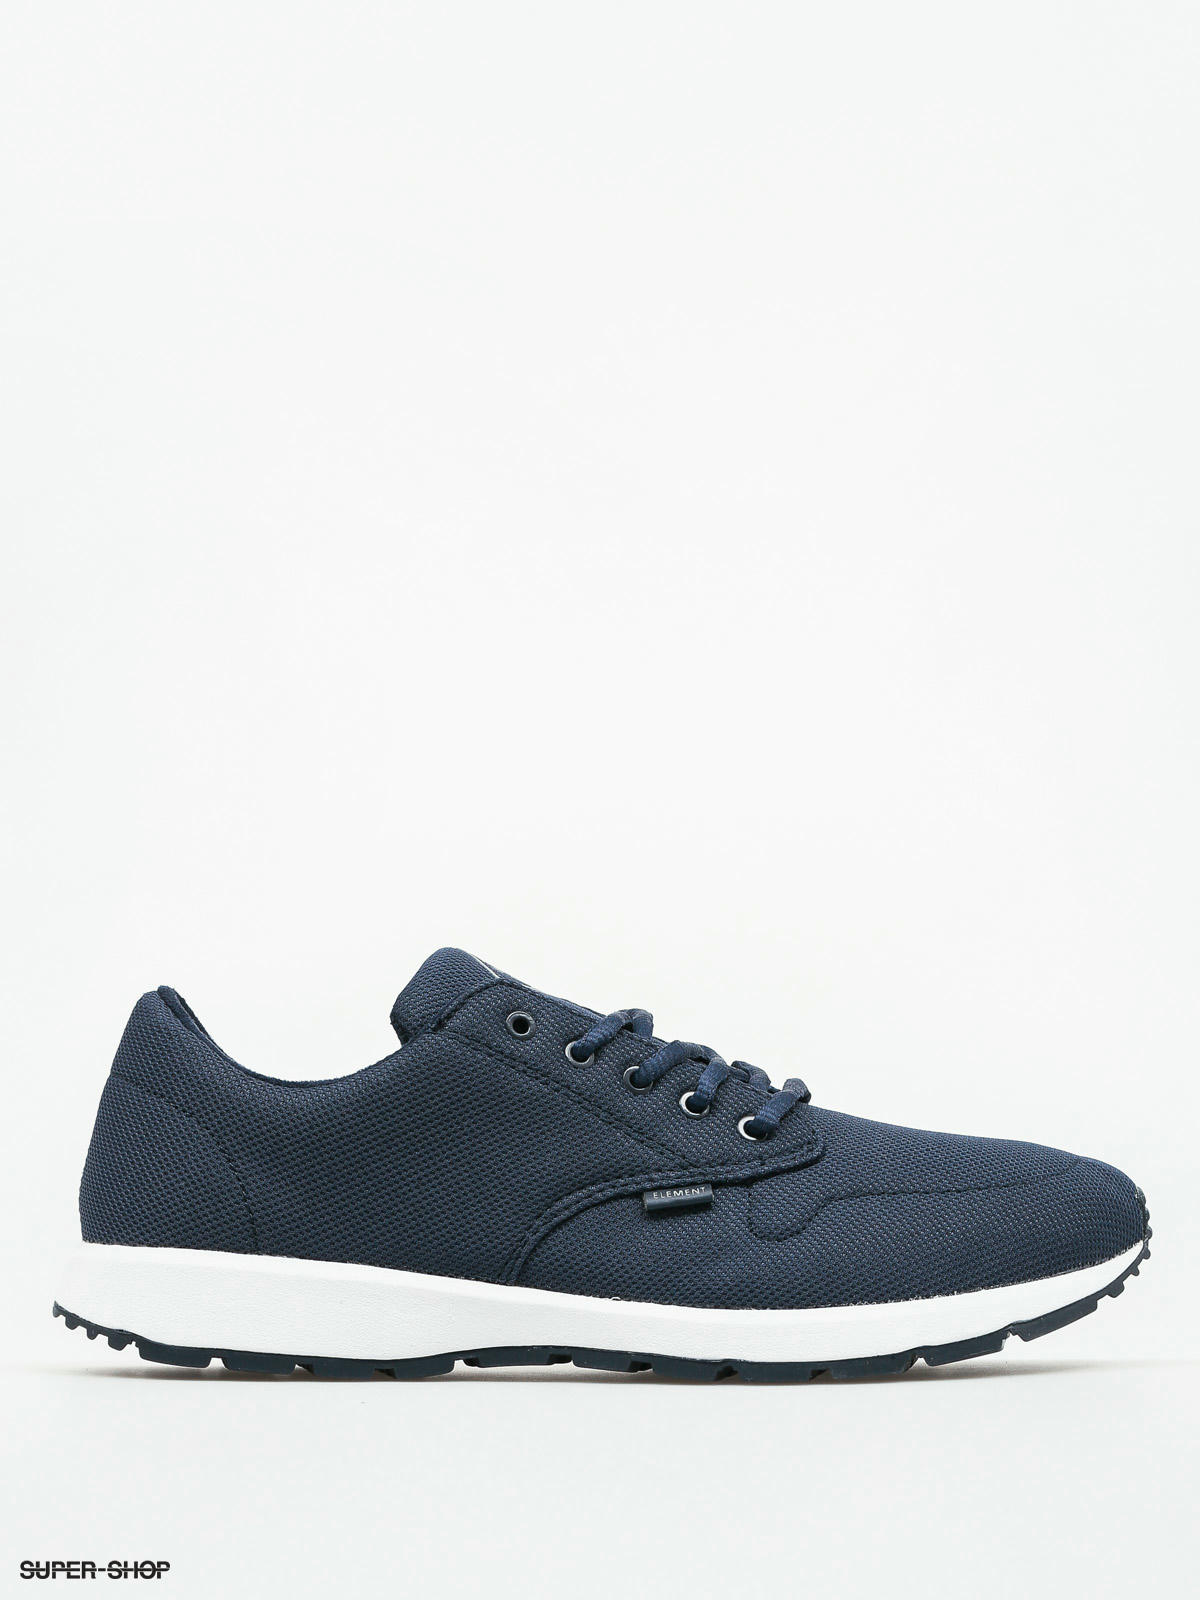 Lacoste Shoes Fairburn M (dark blue)